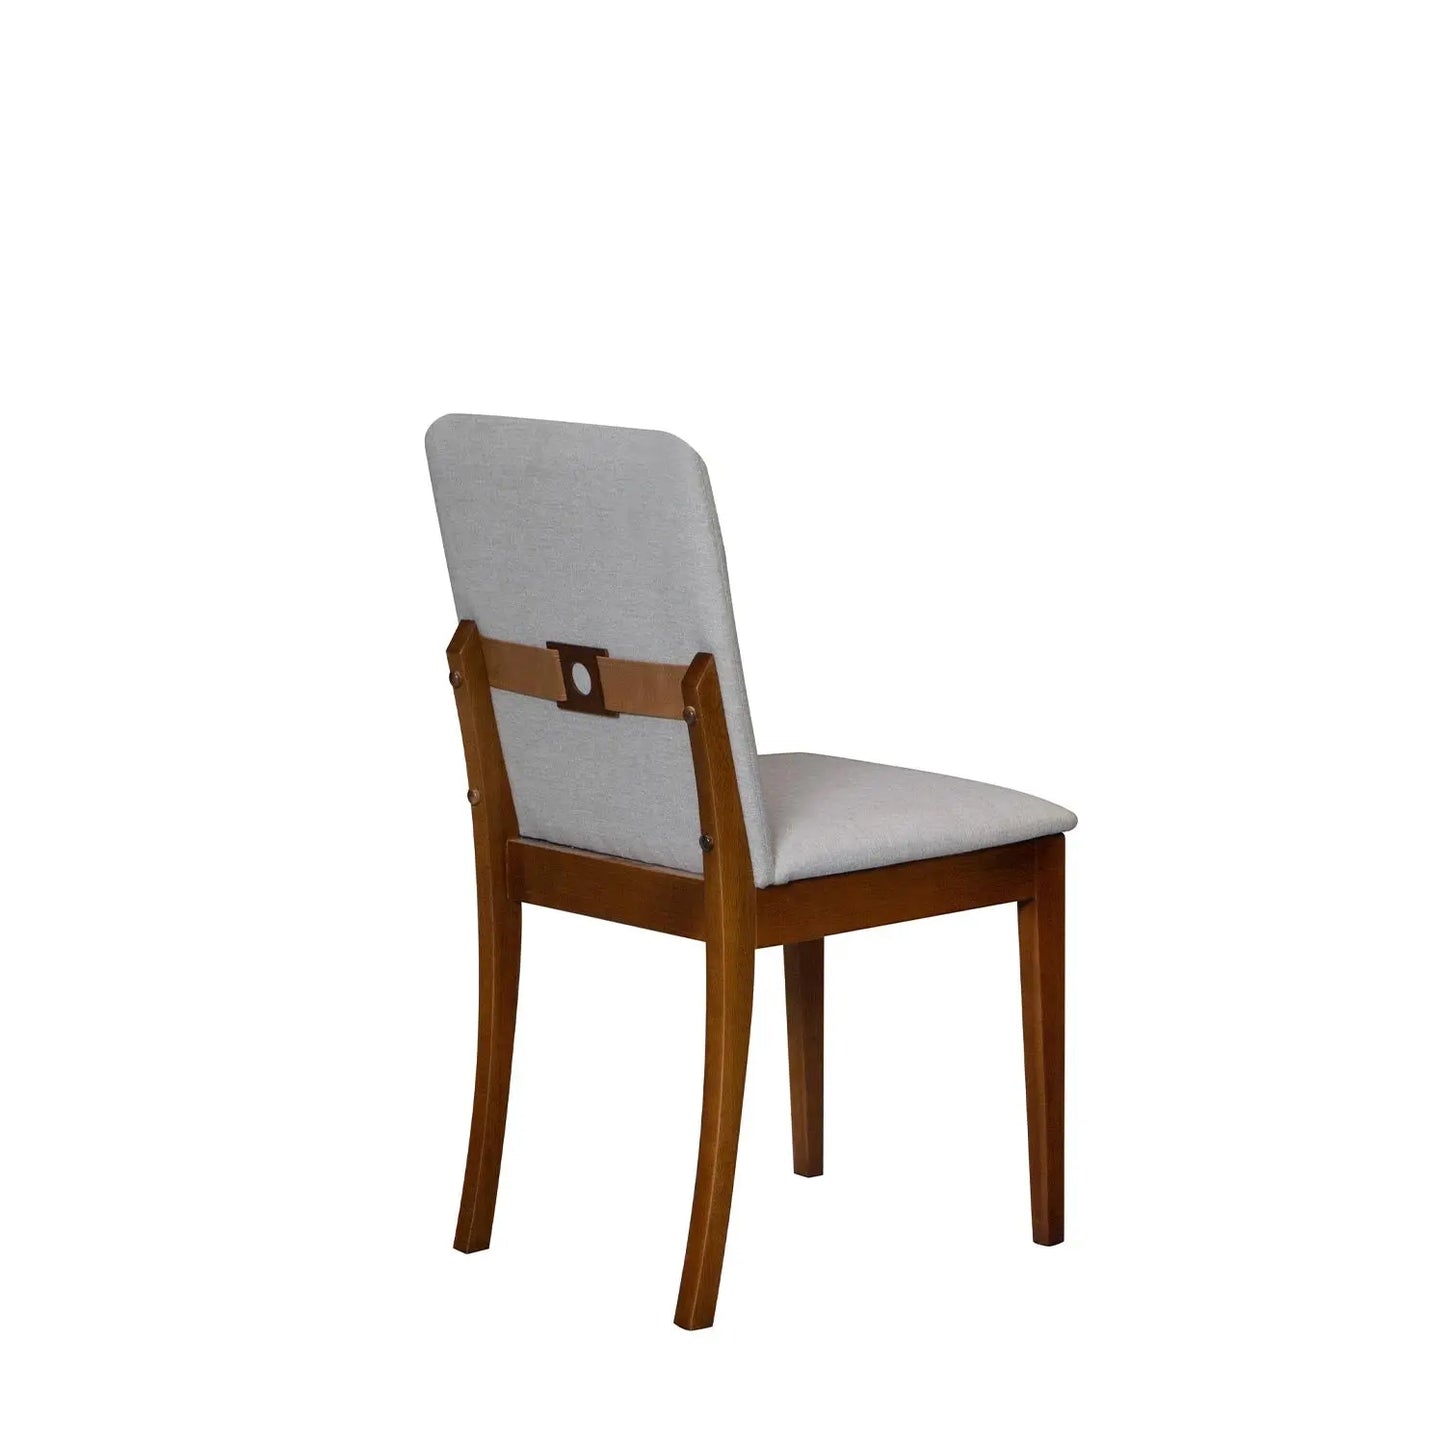 Homedock Cadeira Viena - Linho Cinza c/ Natural Fratter